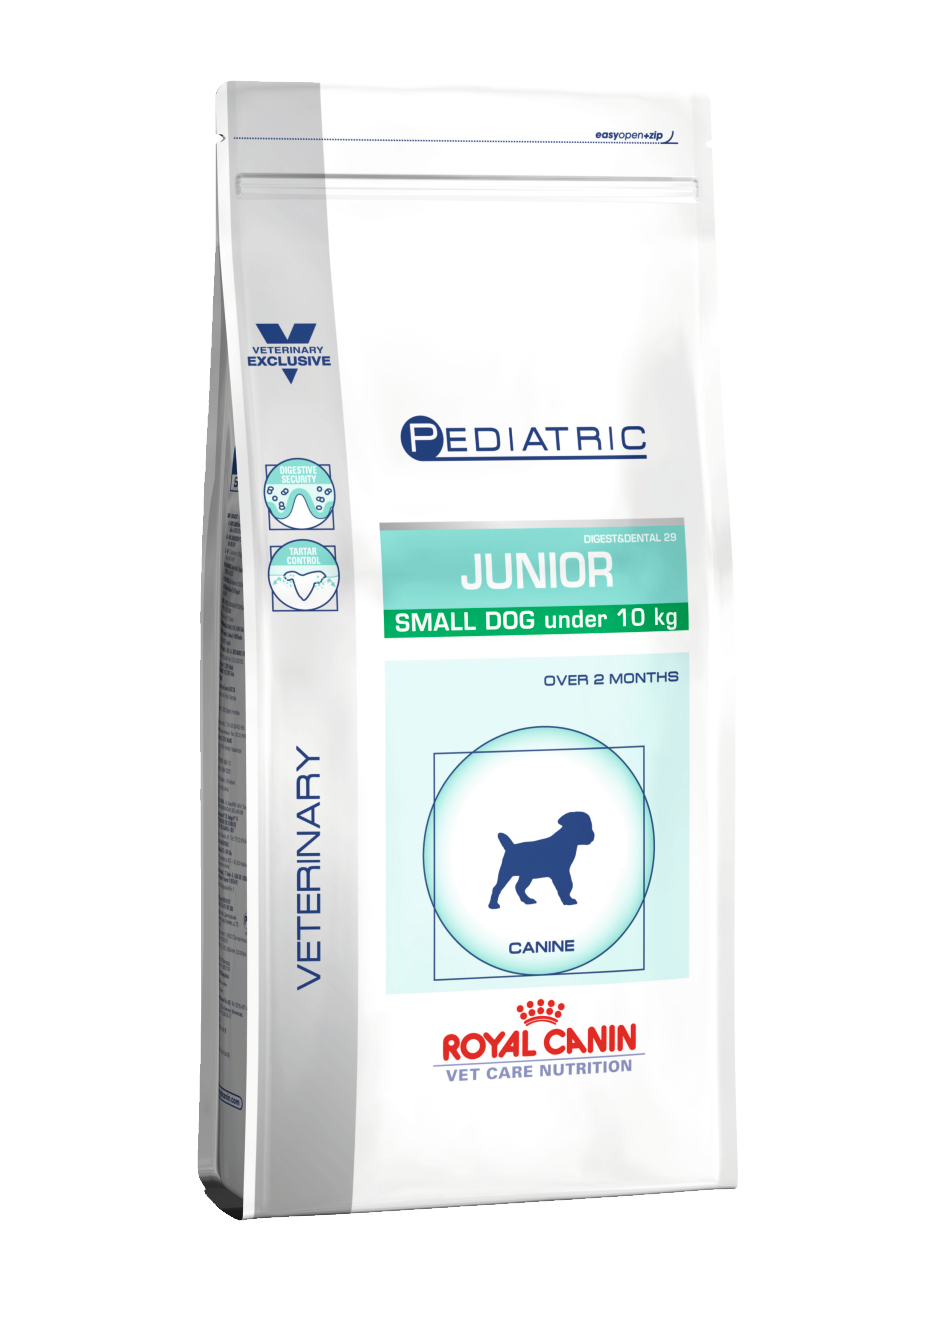 royal canin paediatric junior